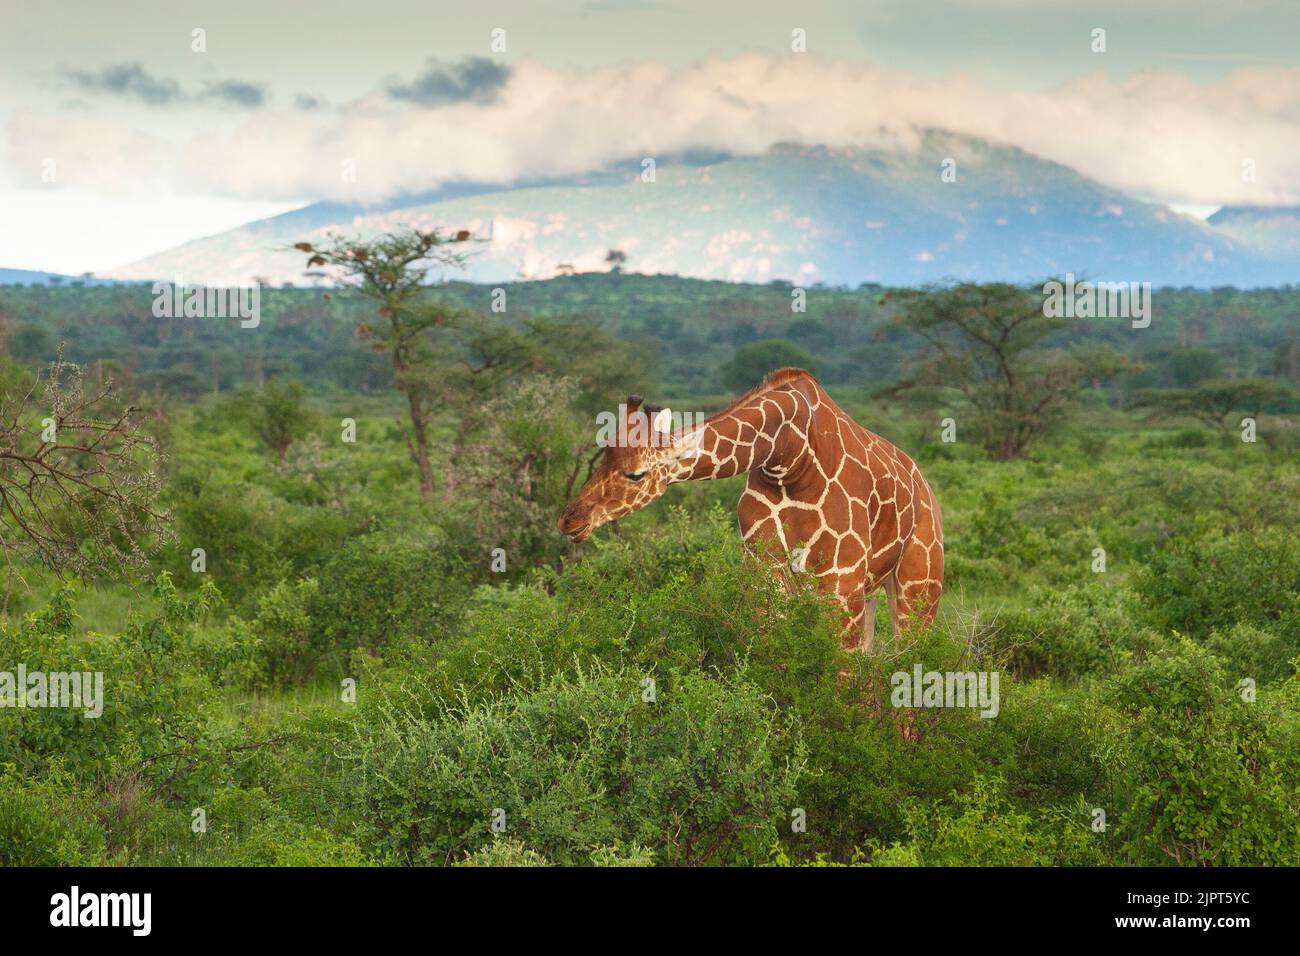 Reticulated Giraffe (Giraffa camelopardalis reticulata) amid the lush green vegetation of Samburu with clouds and mountain in background Stock Photo